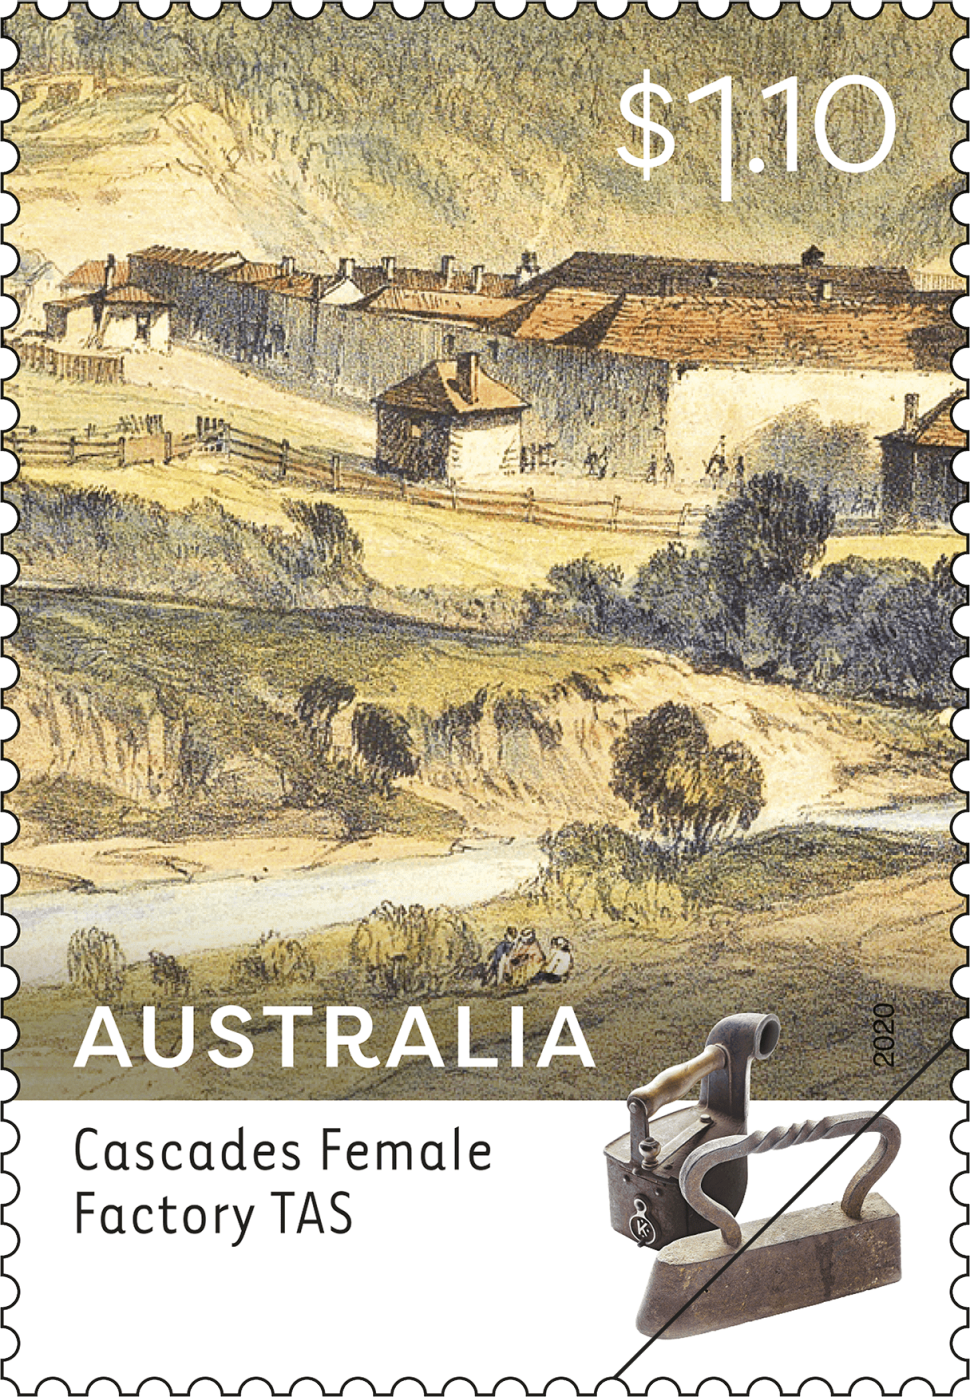 $1.10 - Cascades Female Factory, Tasmania